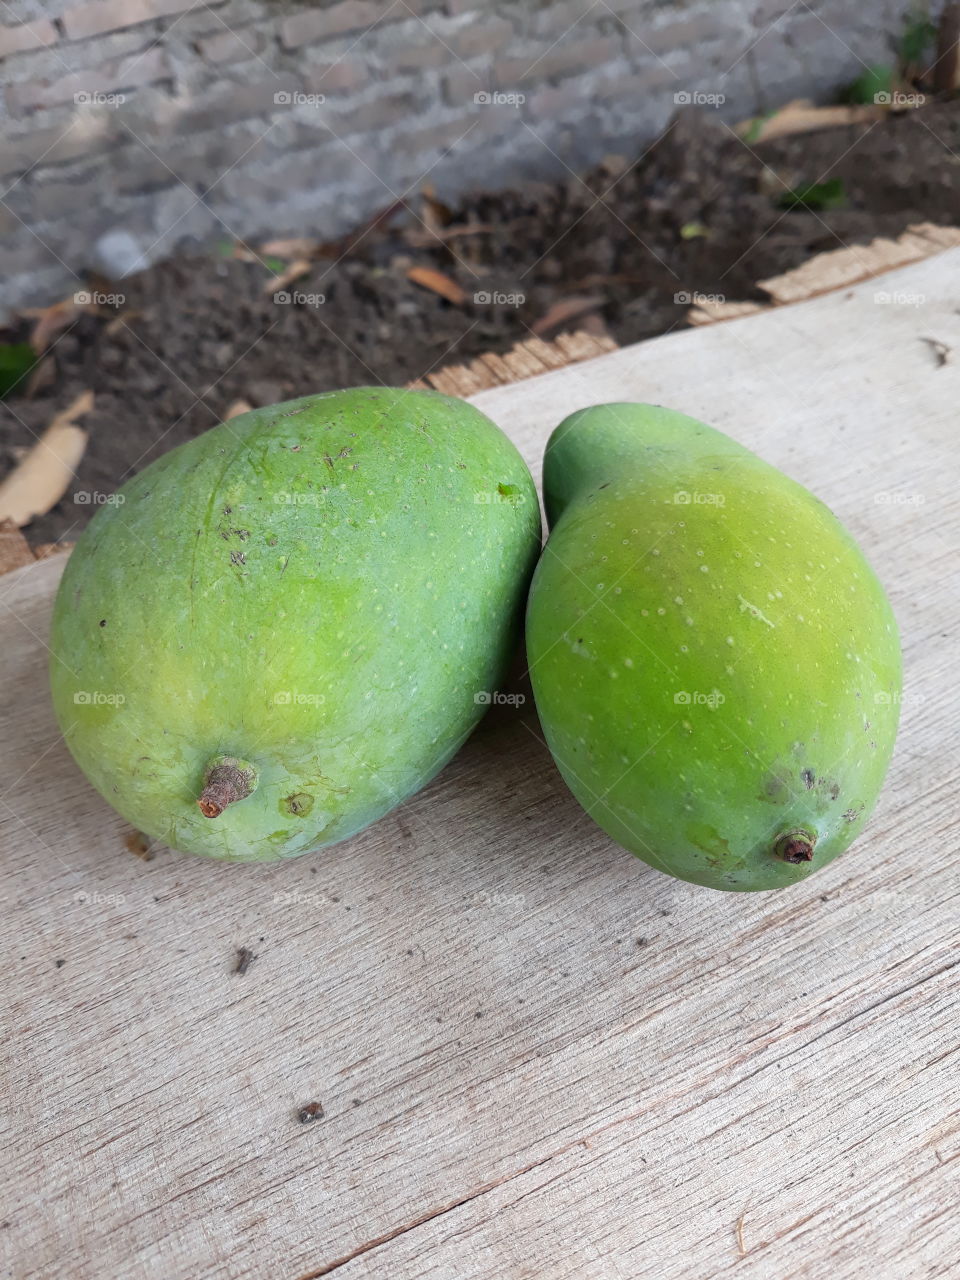 local mangoes